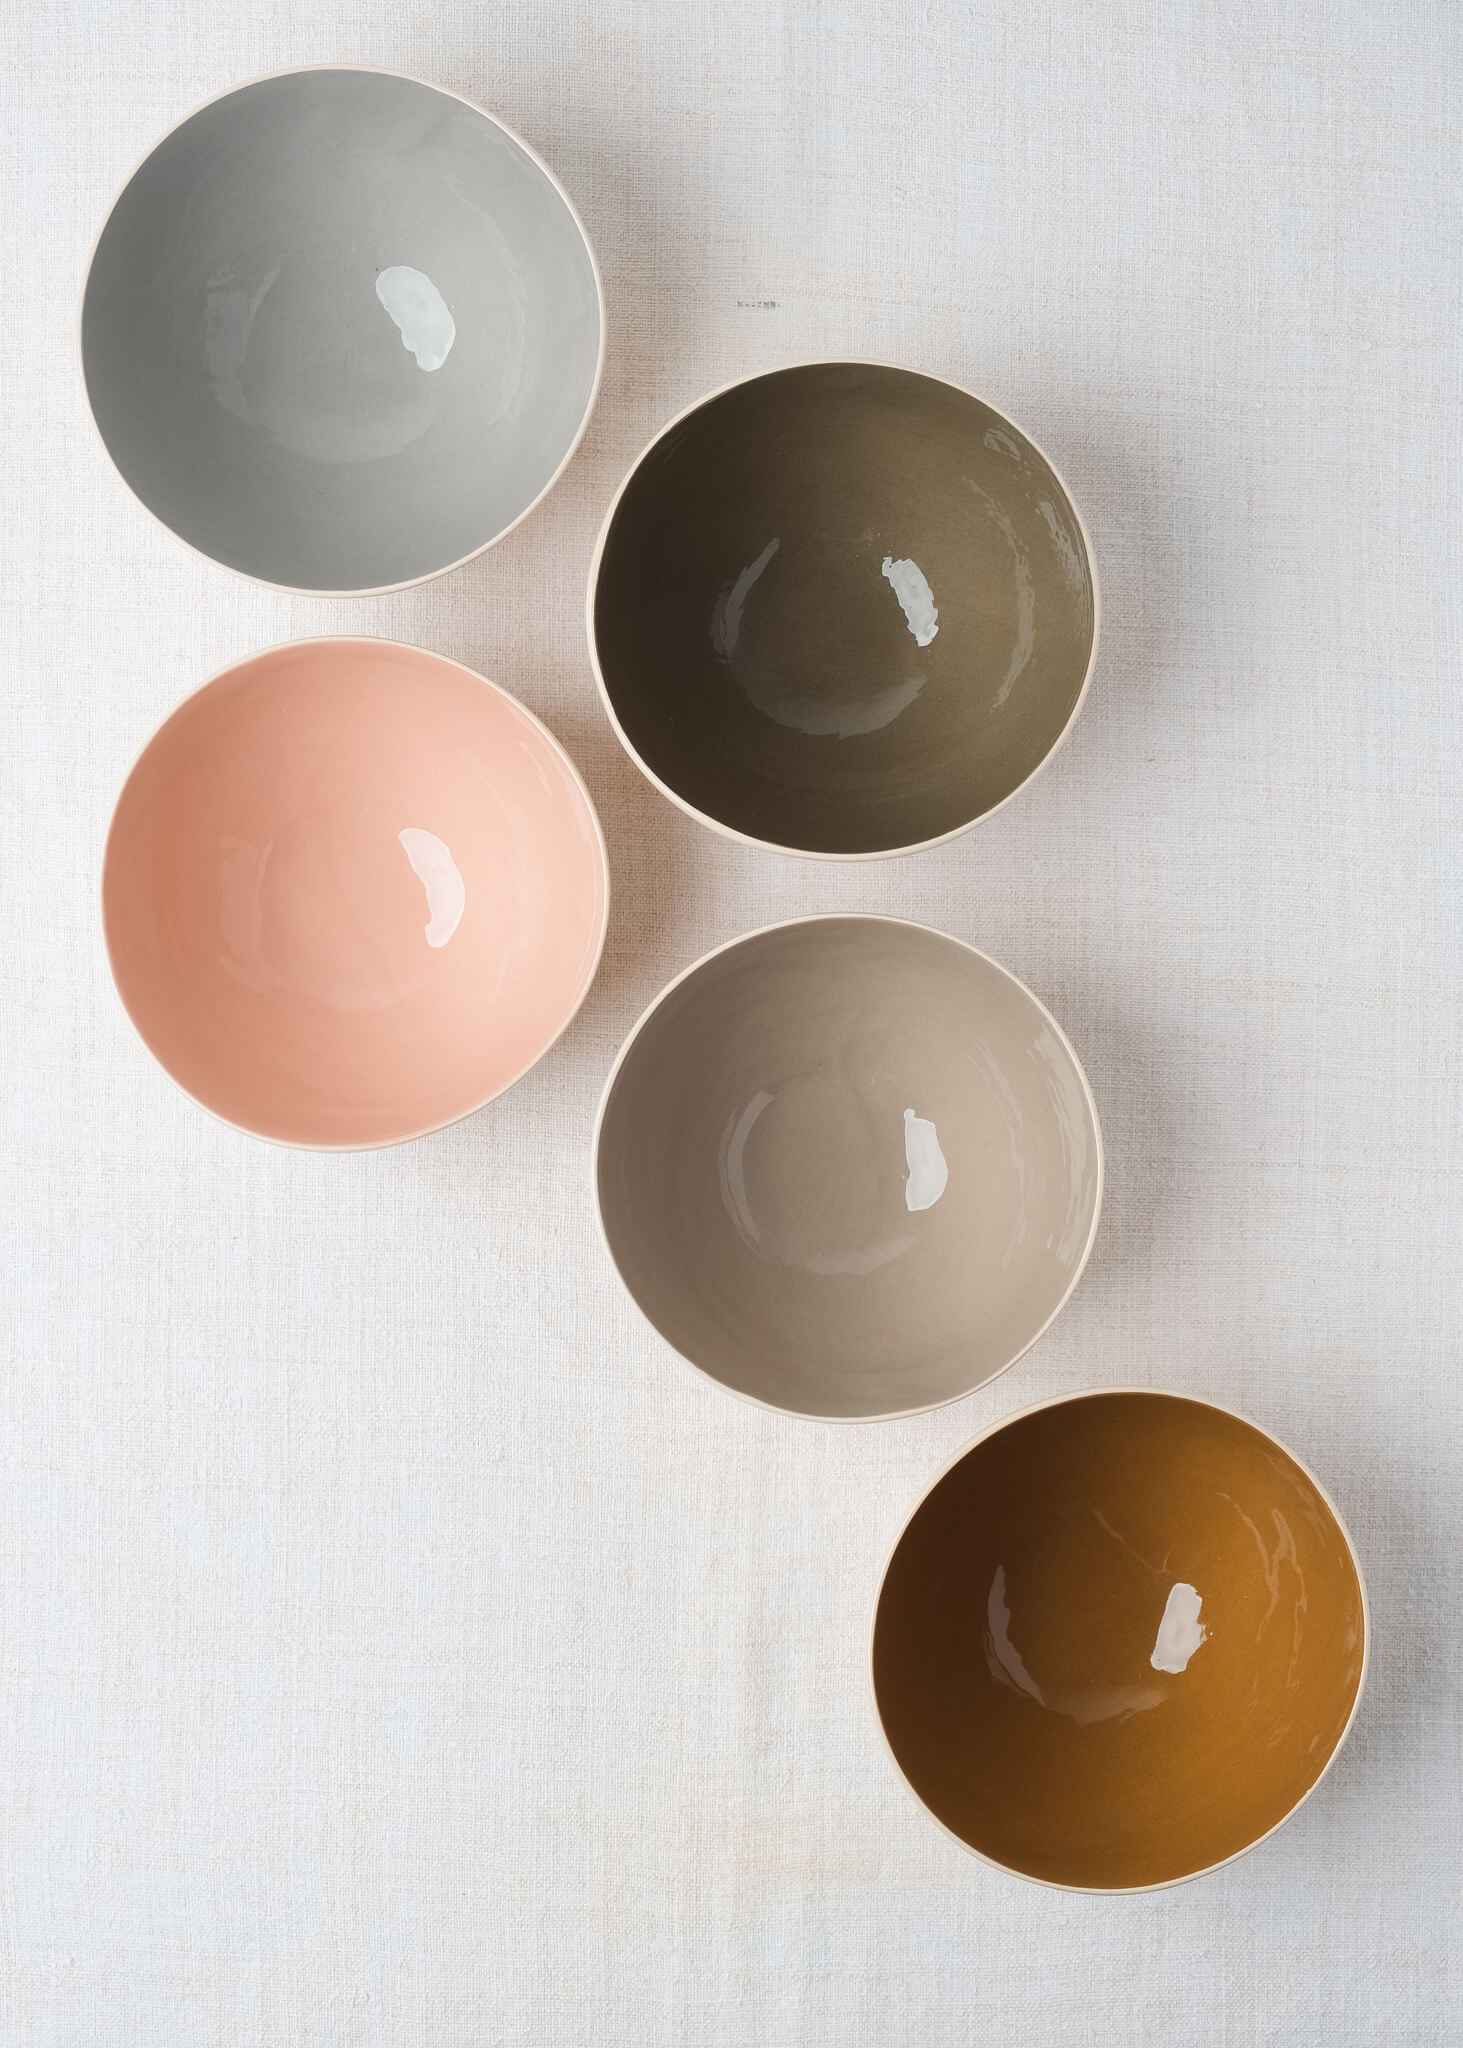 Handmade Rice Bowl – Pumice